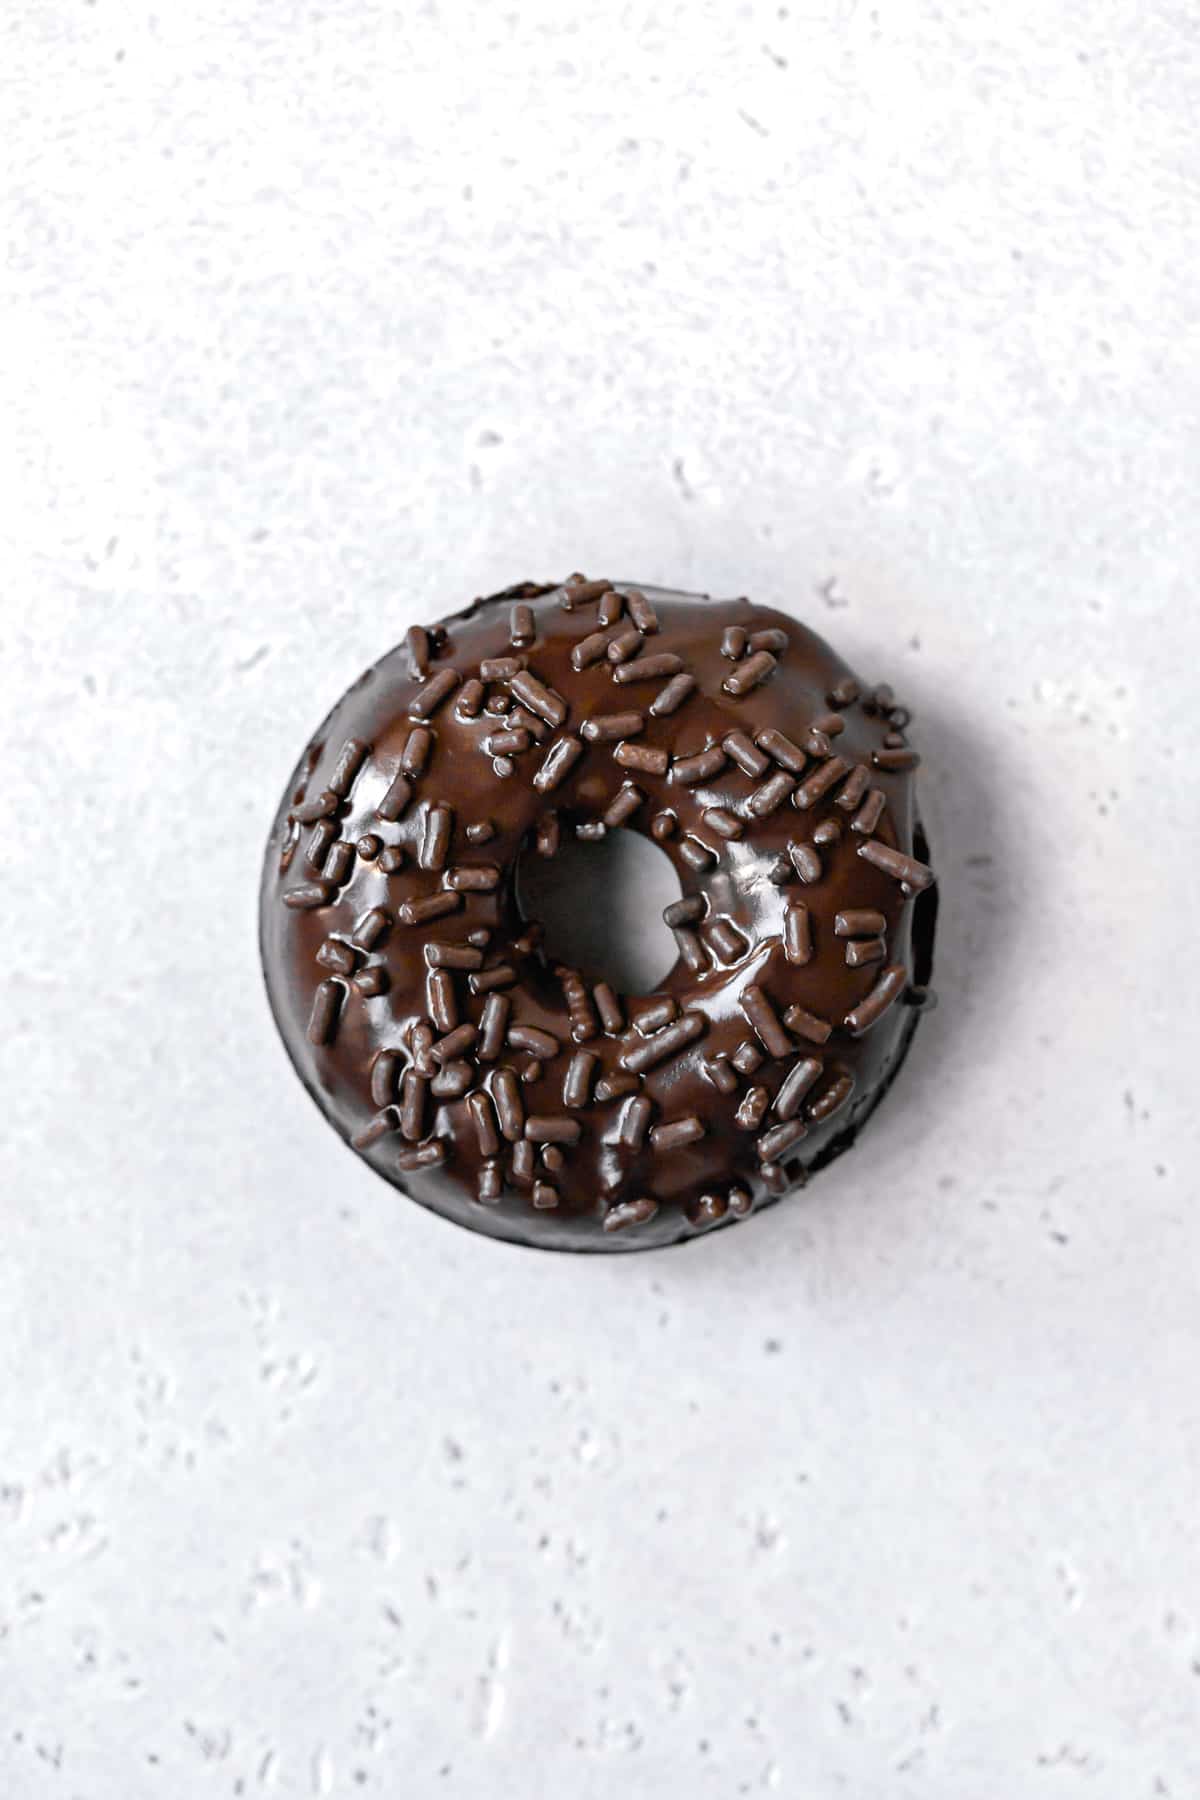 one chocolate cake donut.